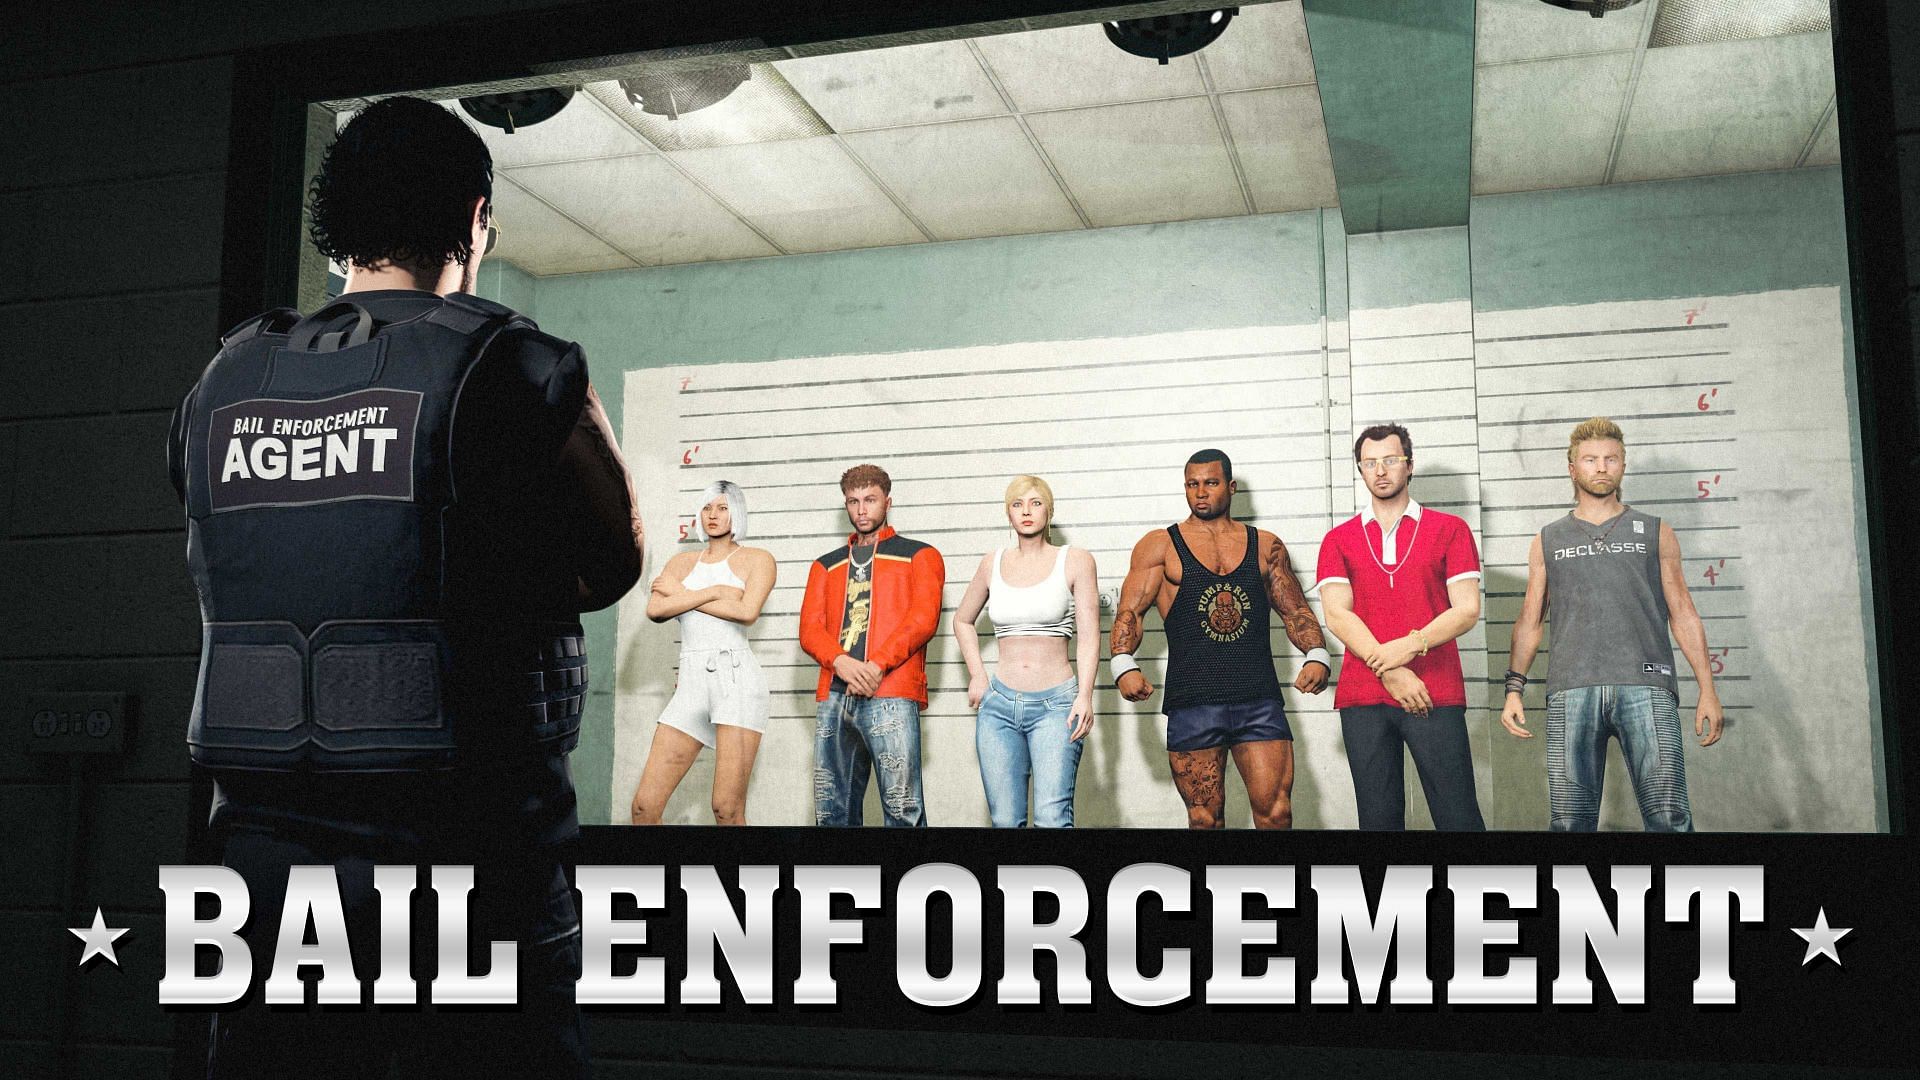 Official Bail Enforcement business artwork (Image via Rockstar Games)